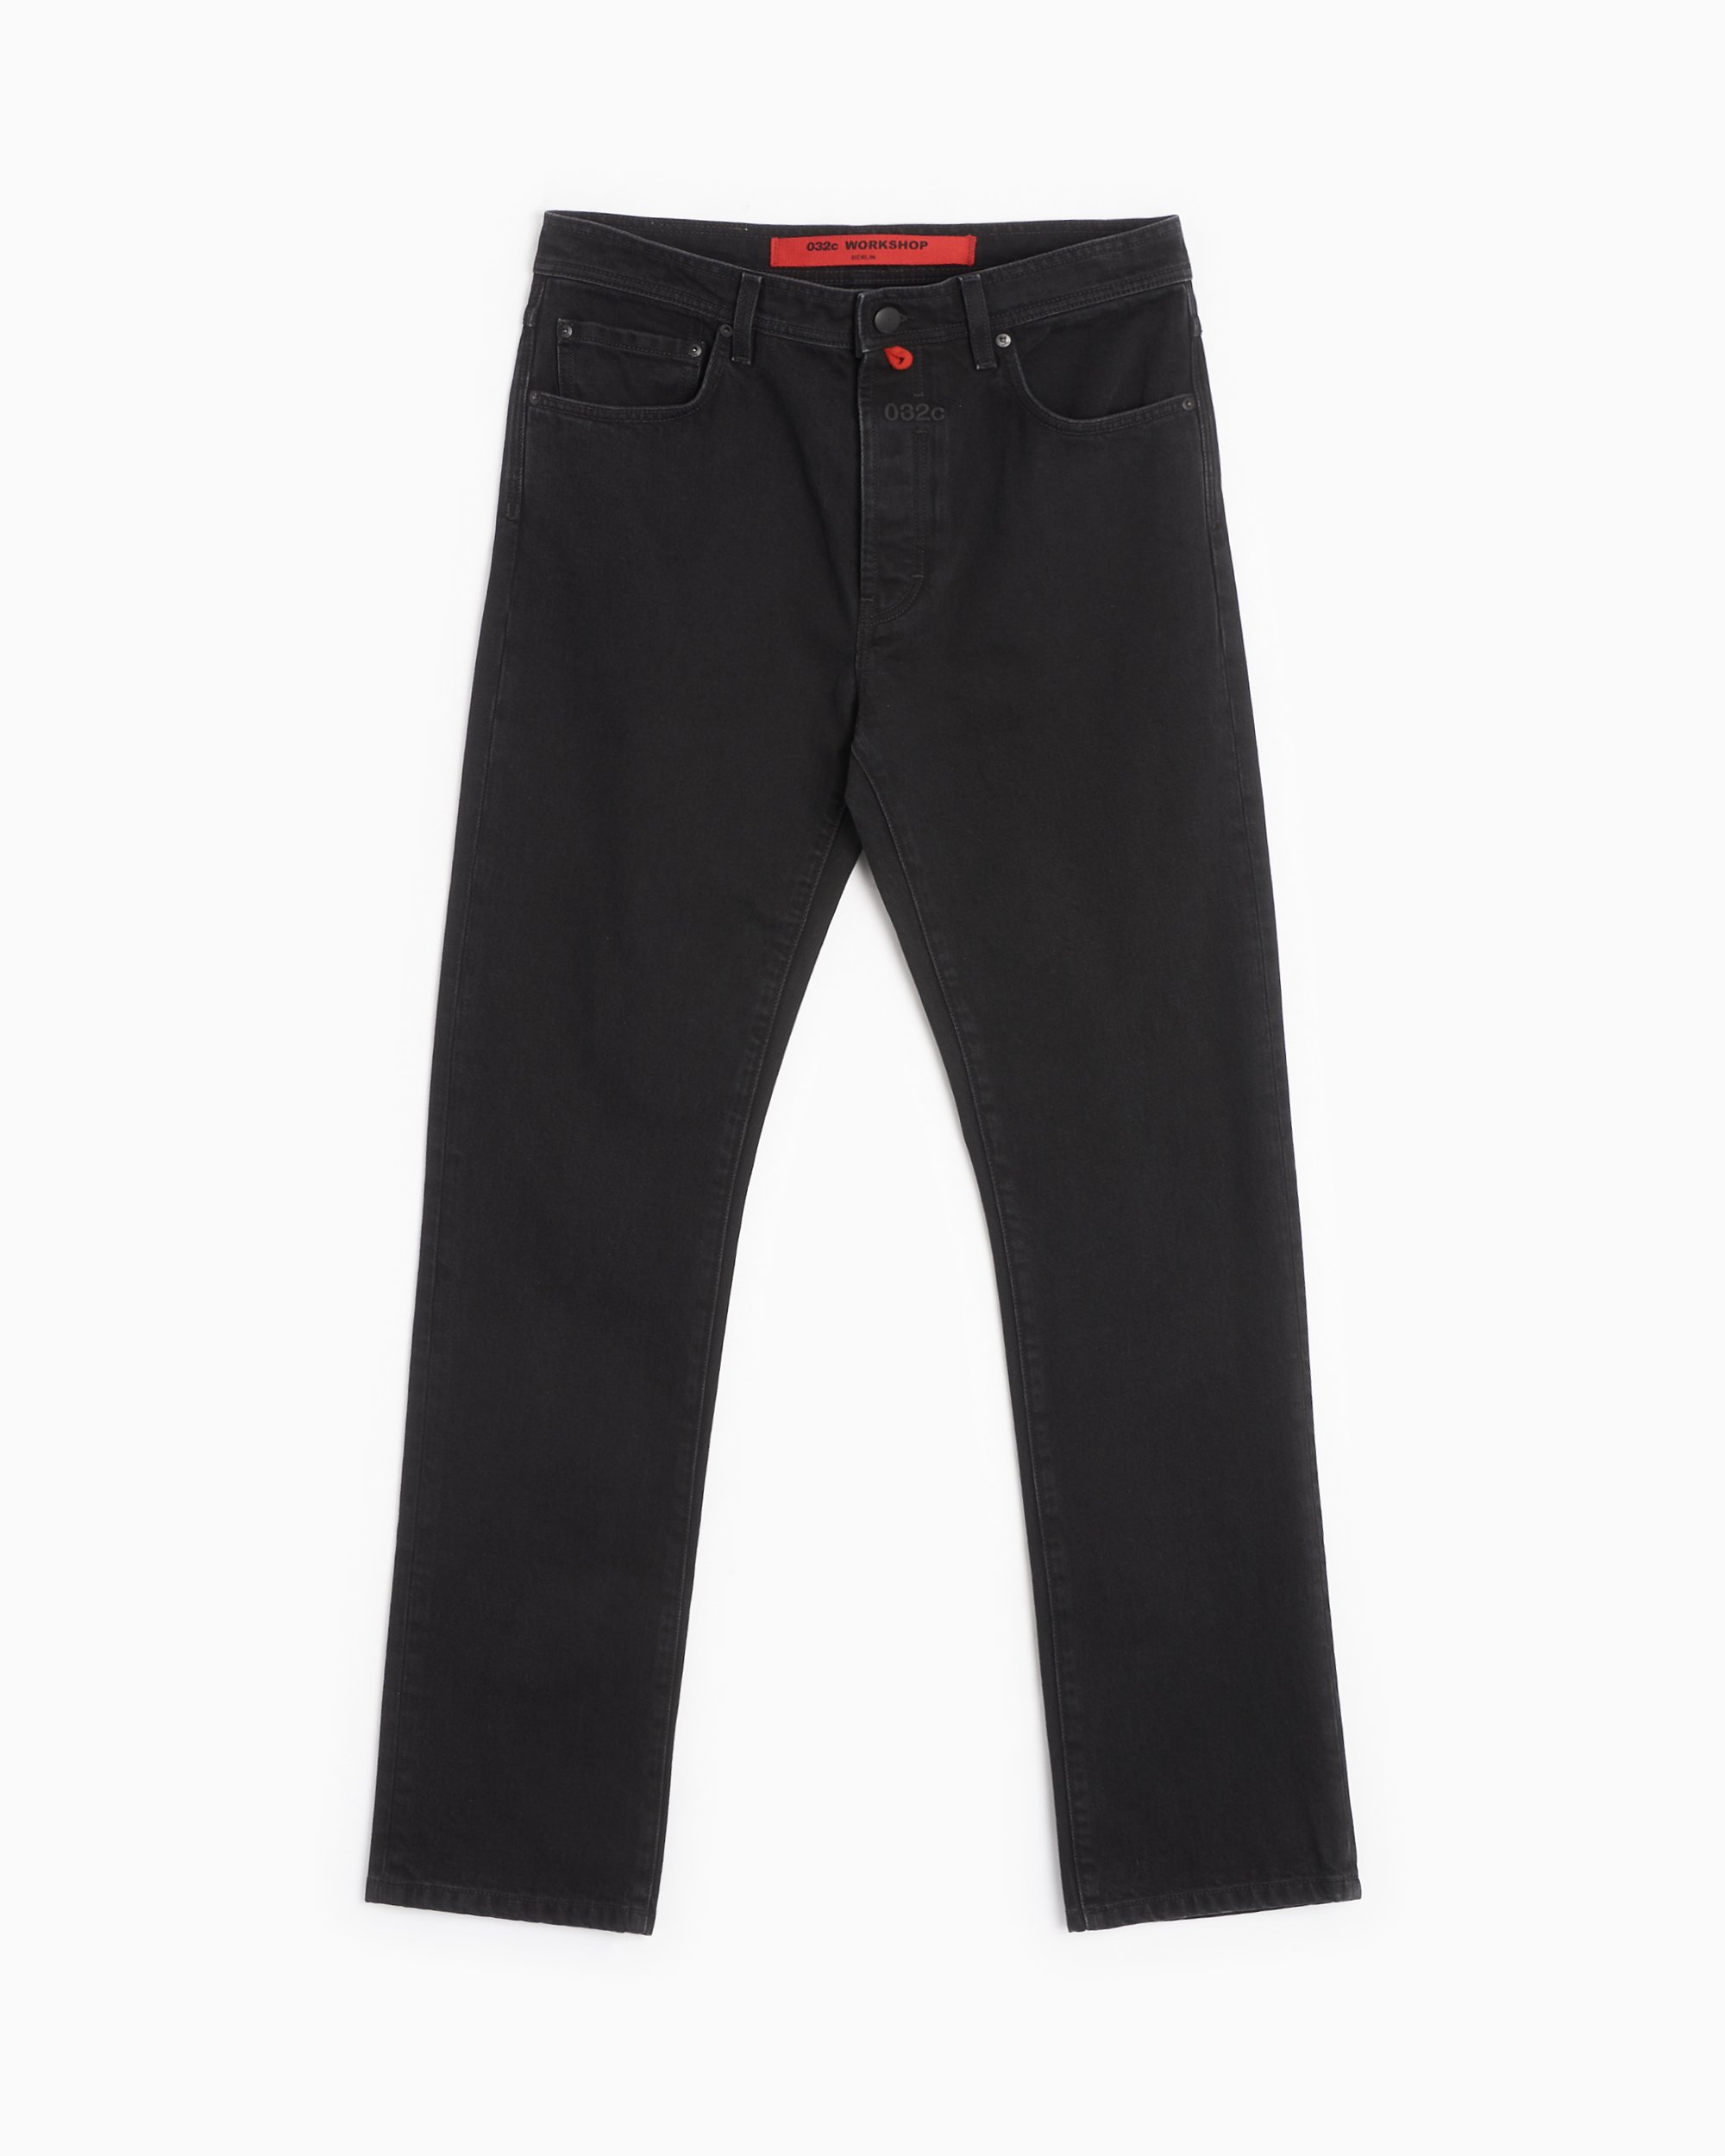 032c New Classic Men's Straight Leg Denim Pants Black FW23-W-3020 